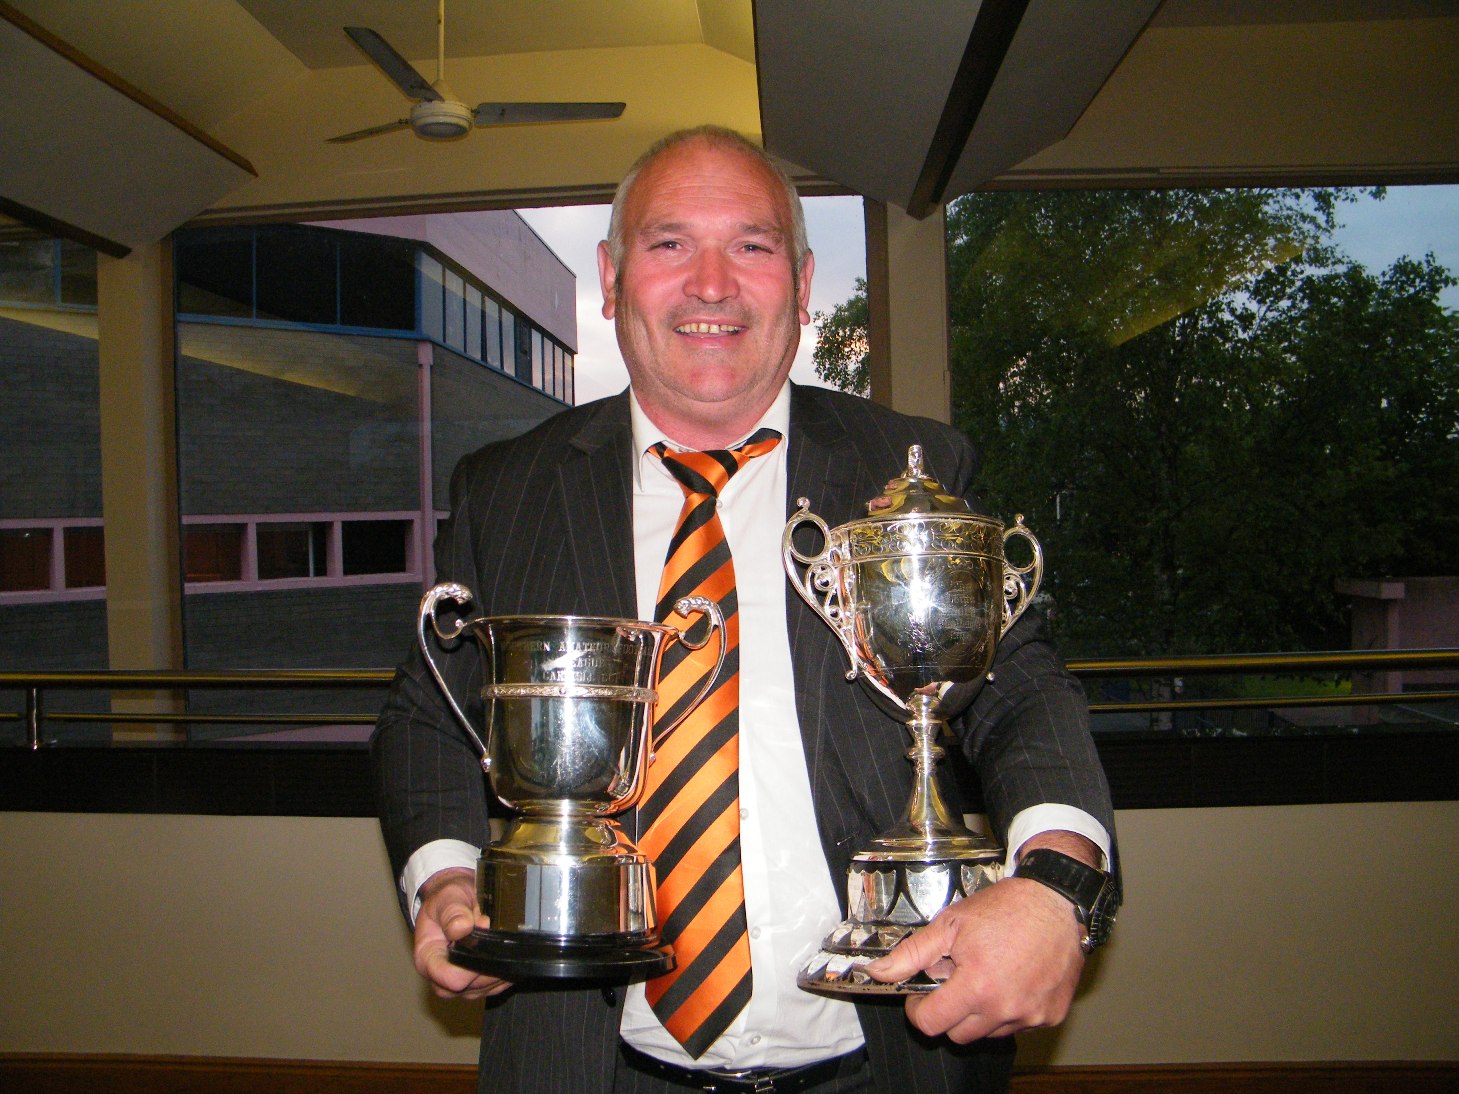 Portaferry Rvs with 2A & 3E trophies 